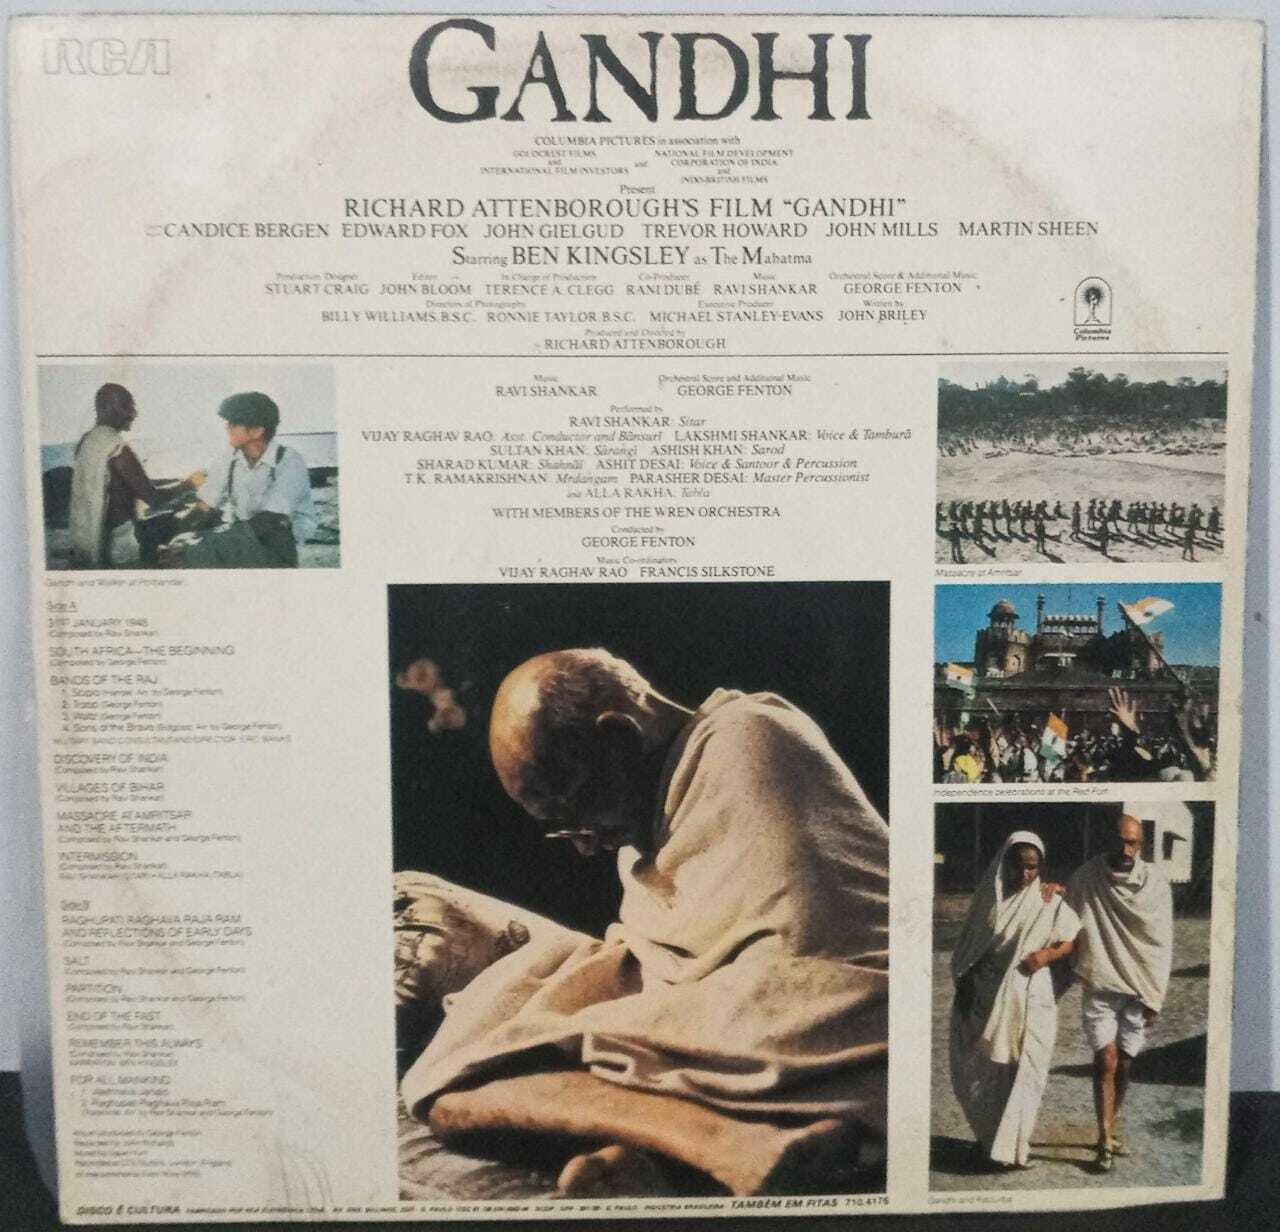 Vinil - Gandhi - Music from the Original Motion Picture Soundtrack (Ravi Shankar and George Fentom)